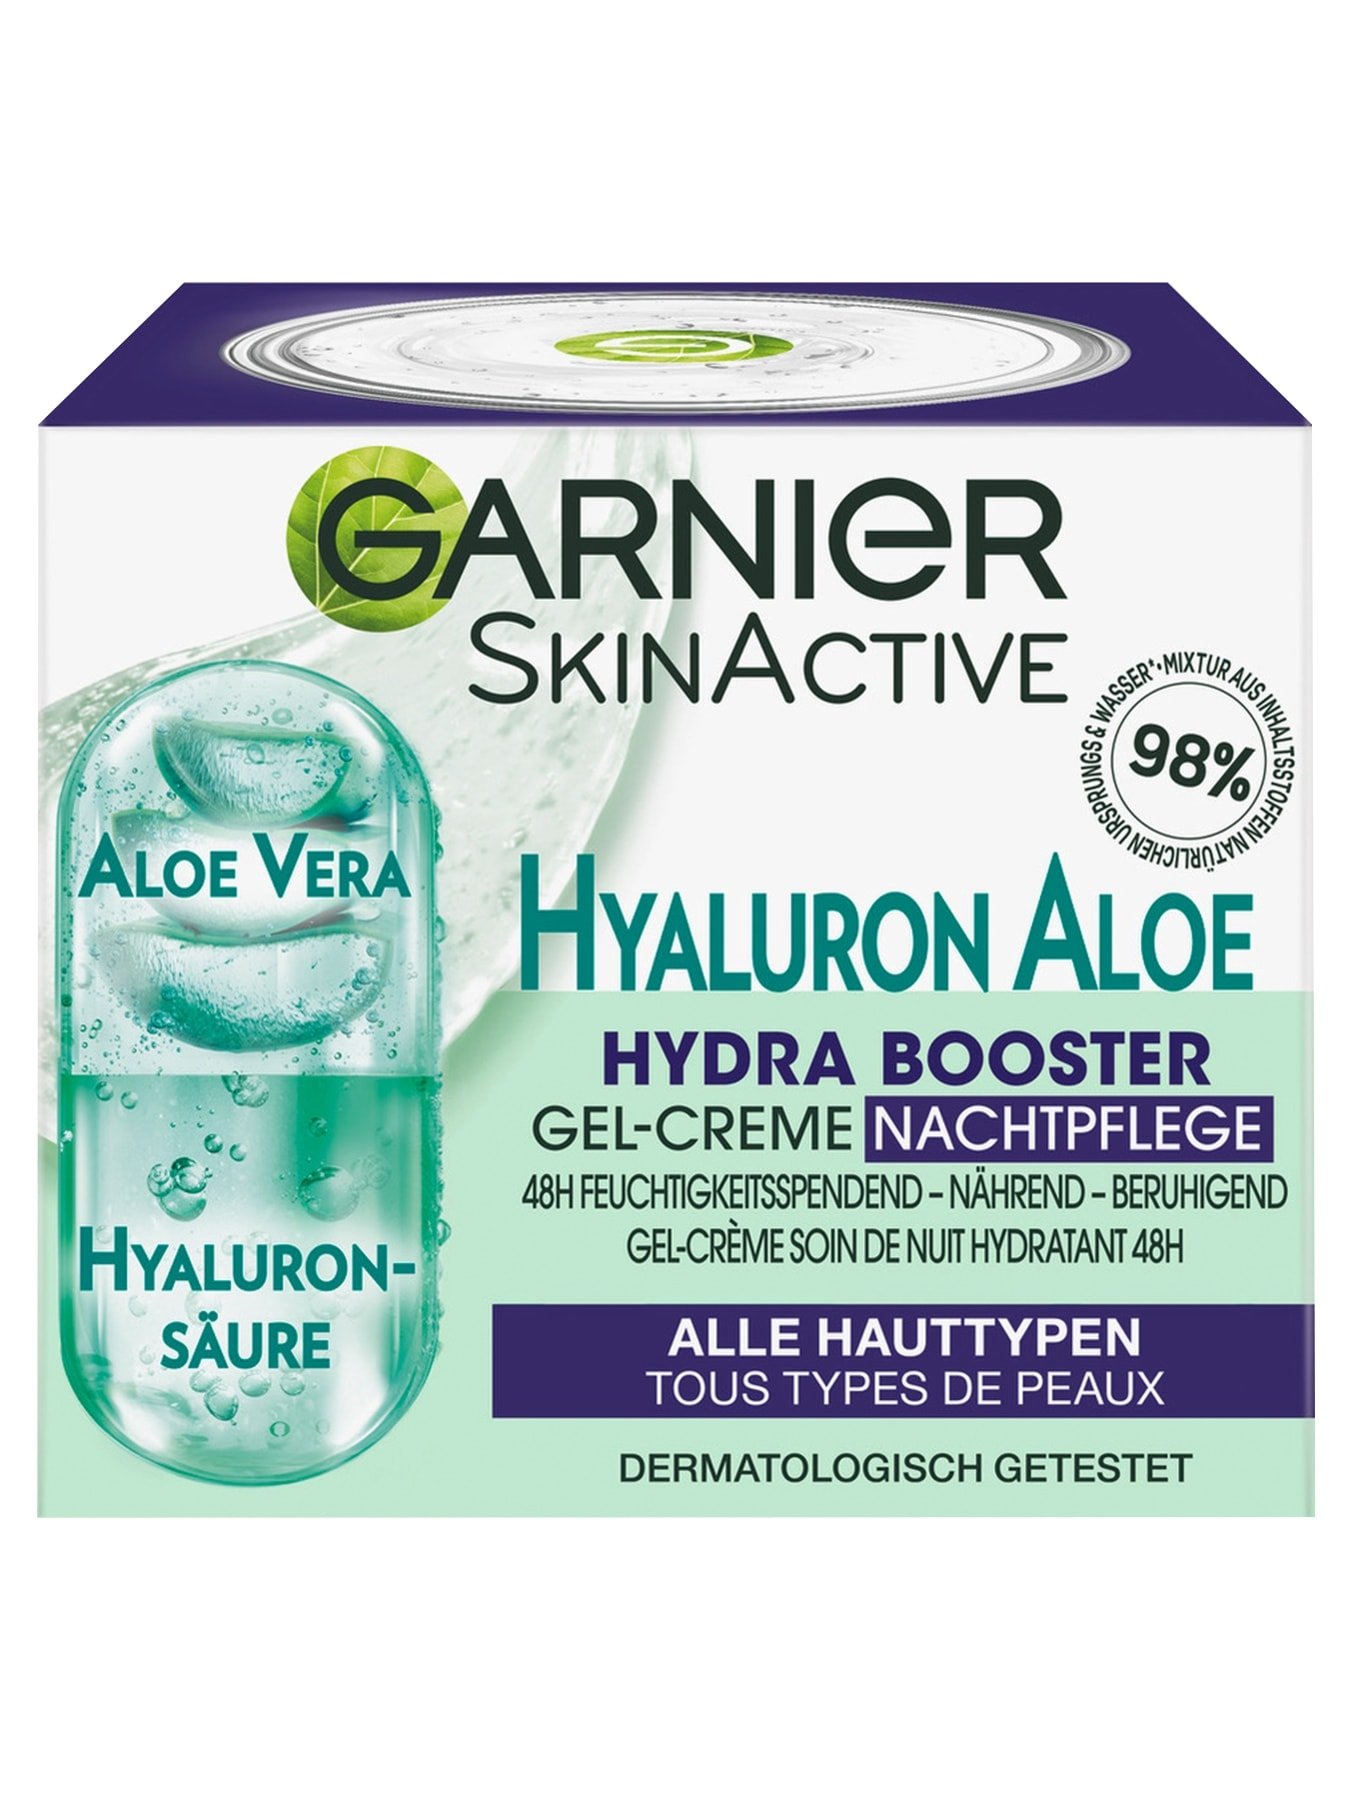 Hyaluron Aloe Hydra Booster Gel-Creme Nachtpflege - Verpackung Front